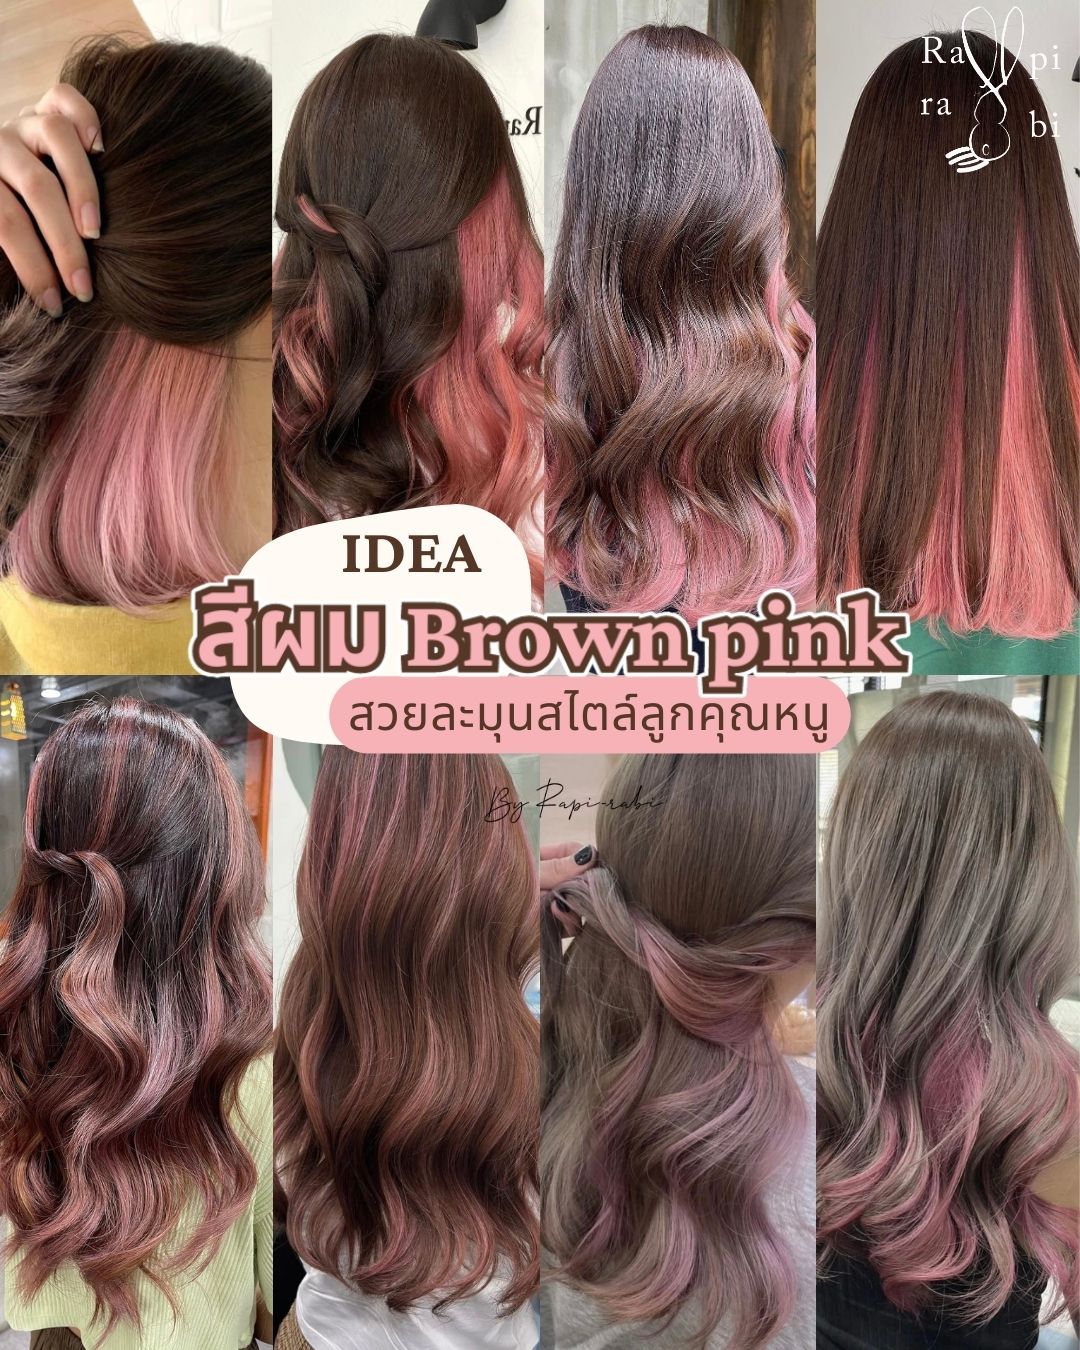 IDEA : สีผม Brown pink สวยละมุนสไตล์ลูกคุณหนู💘 By Rapi-rabi